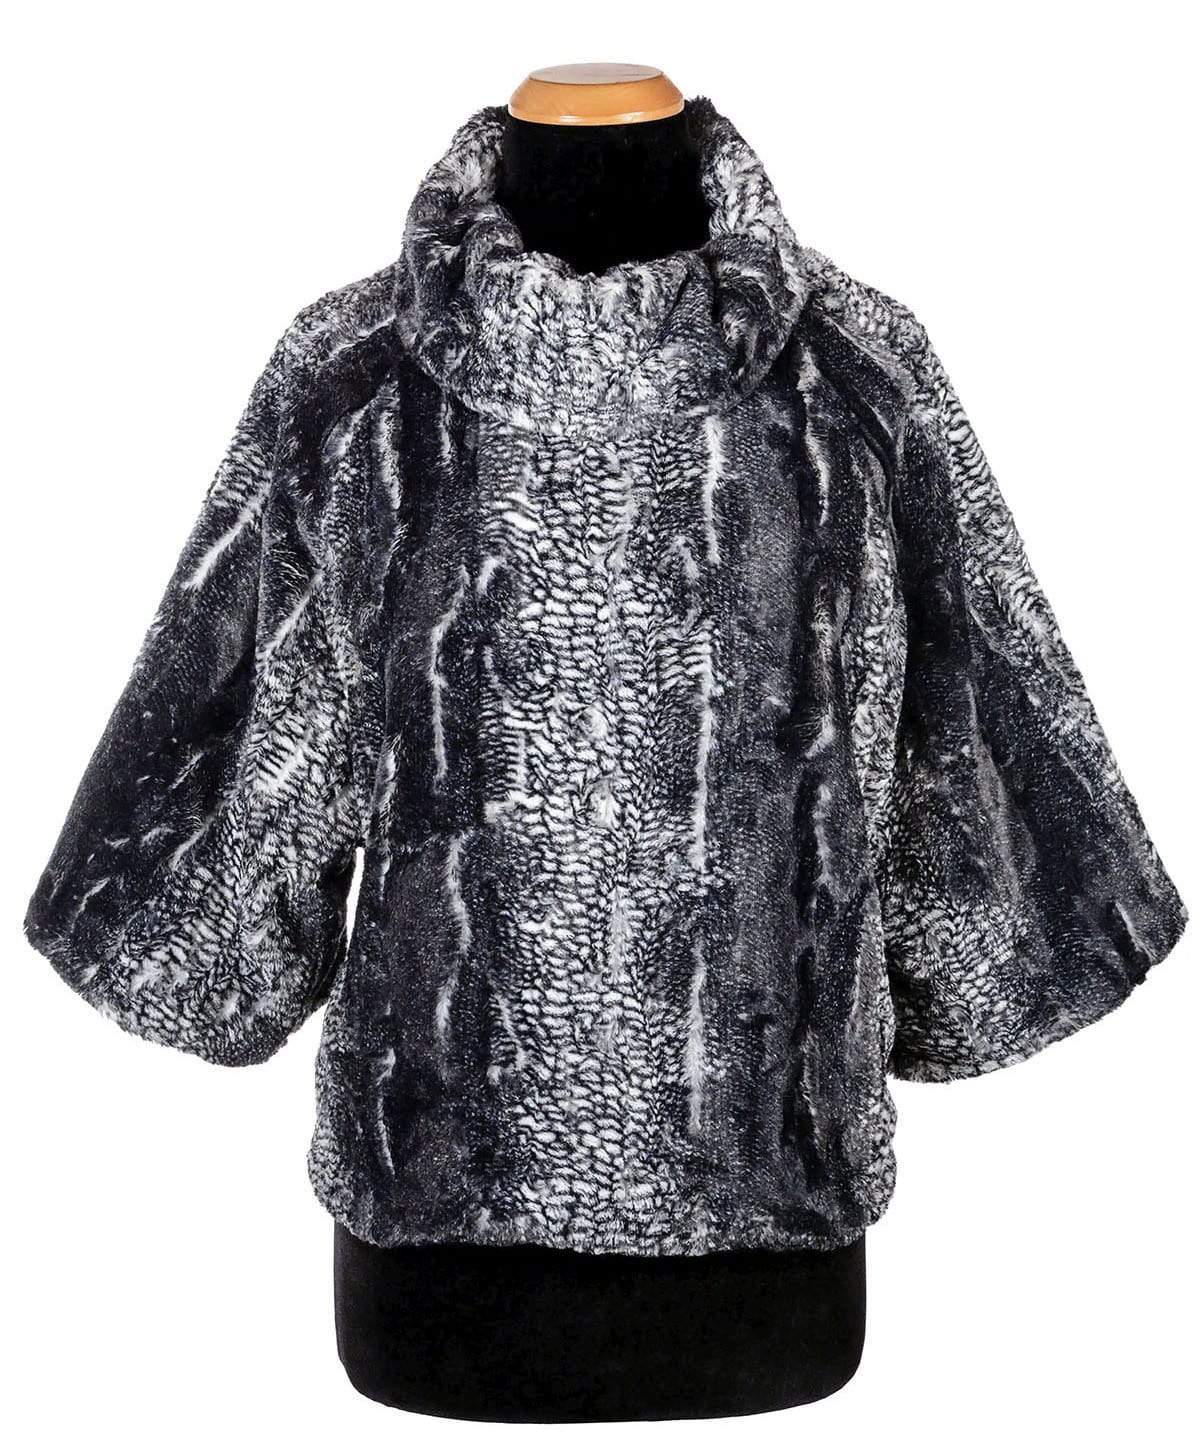 Sweater Top Plus 4 in | Black Mamba Black and White Faux Fur | Handmade By Pandemonium Millinery | Seattle WA USA